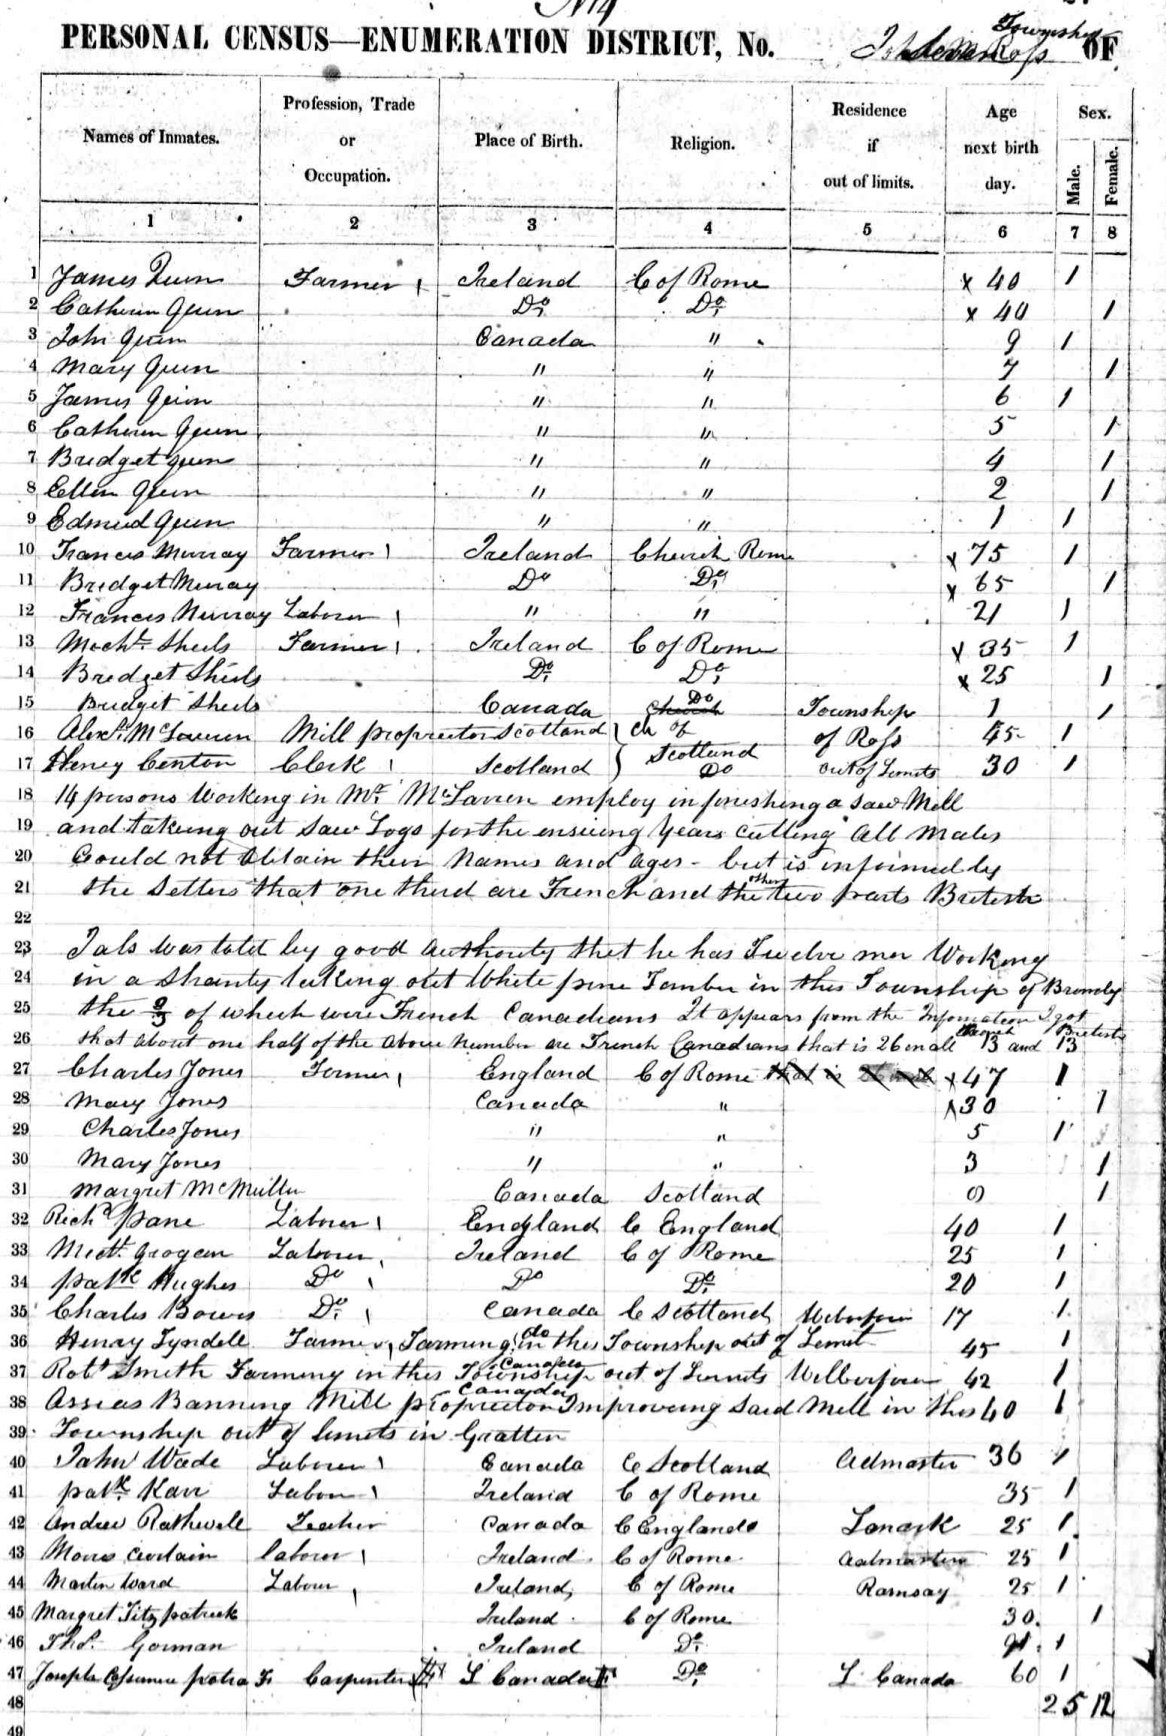 Part of Bromley Census, 1851, Ontario, Canada